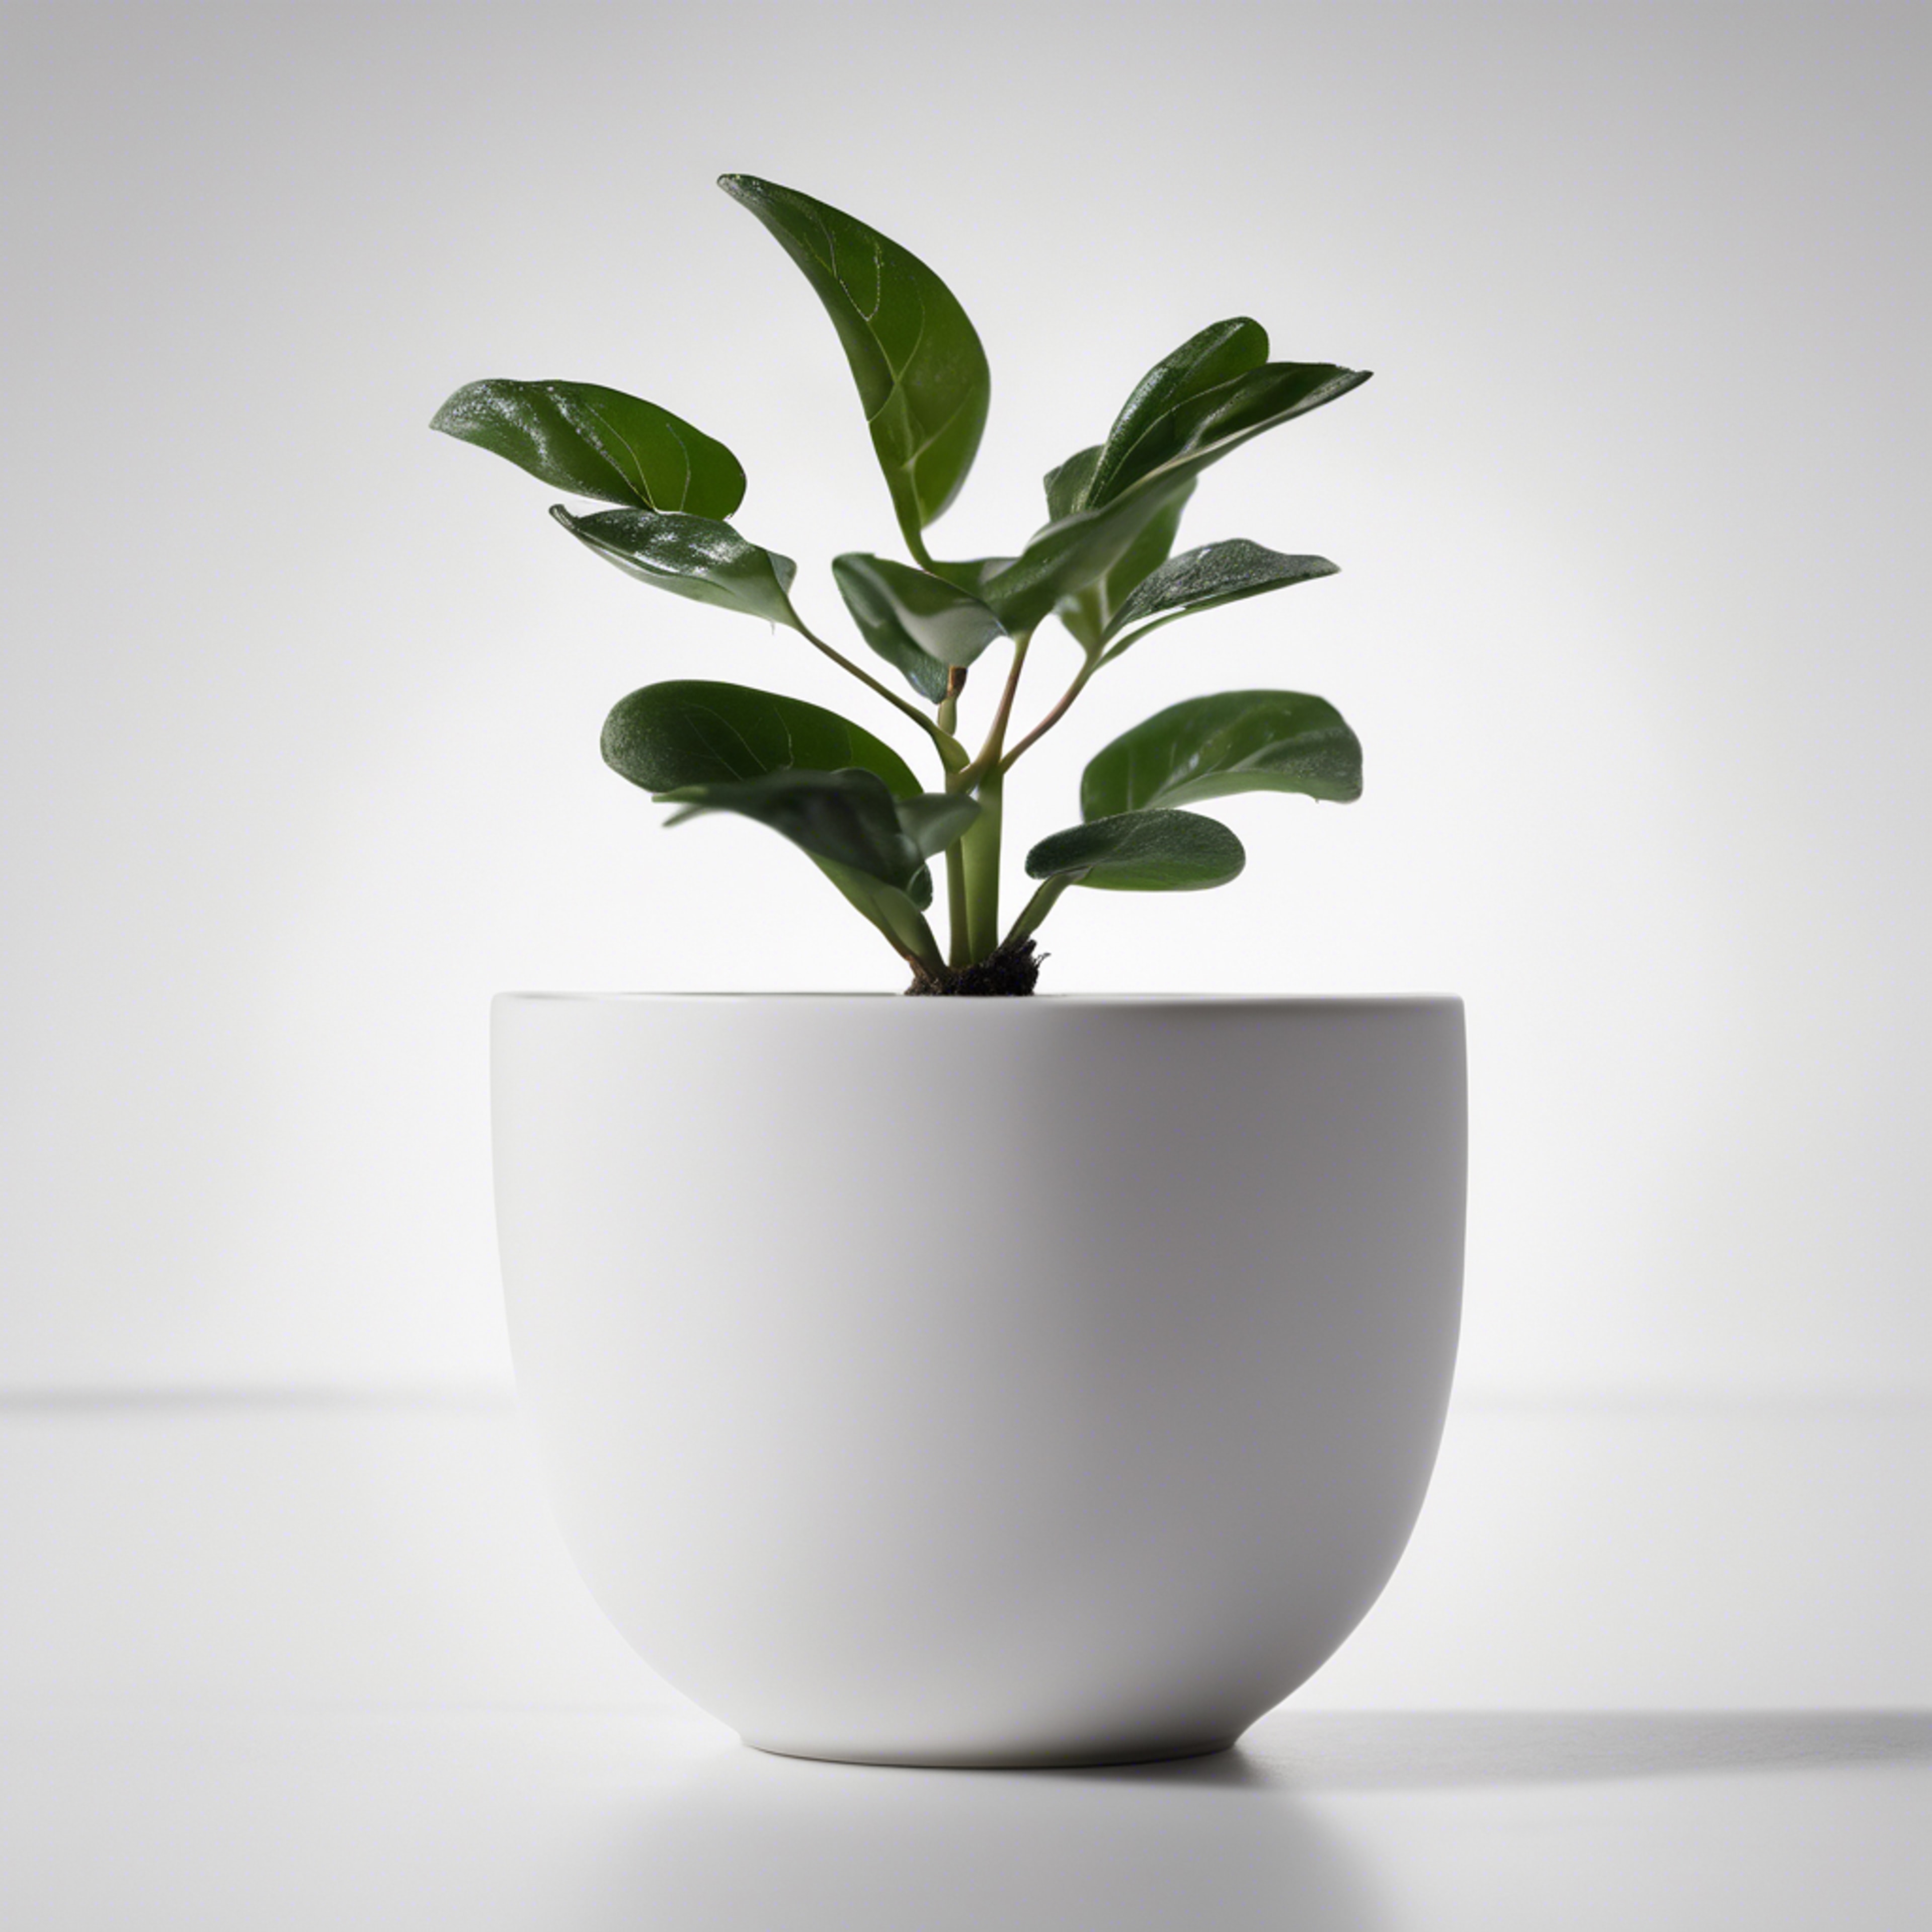 Small plant in a simple white ceramic pot against a minimalist white backdrop. Ταπετσαρία[a9b2ed4c340742d2b1fd]